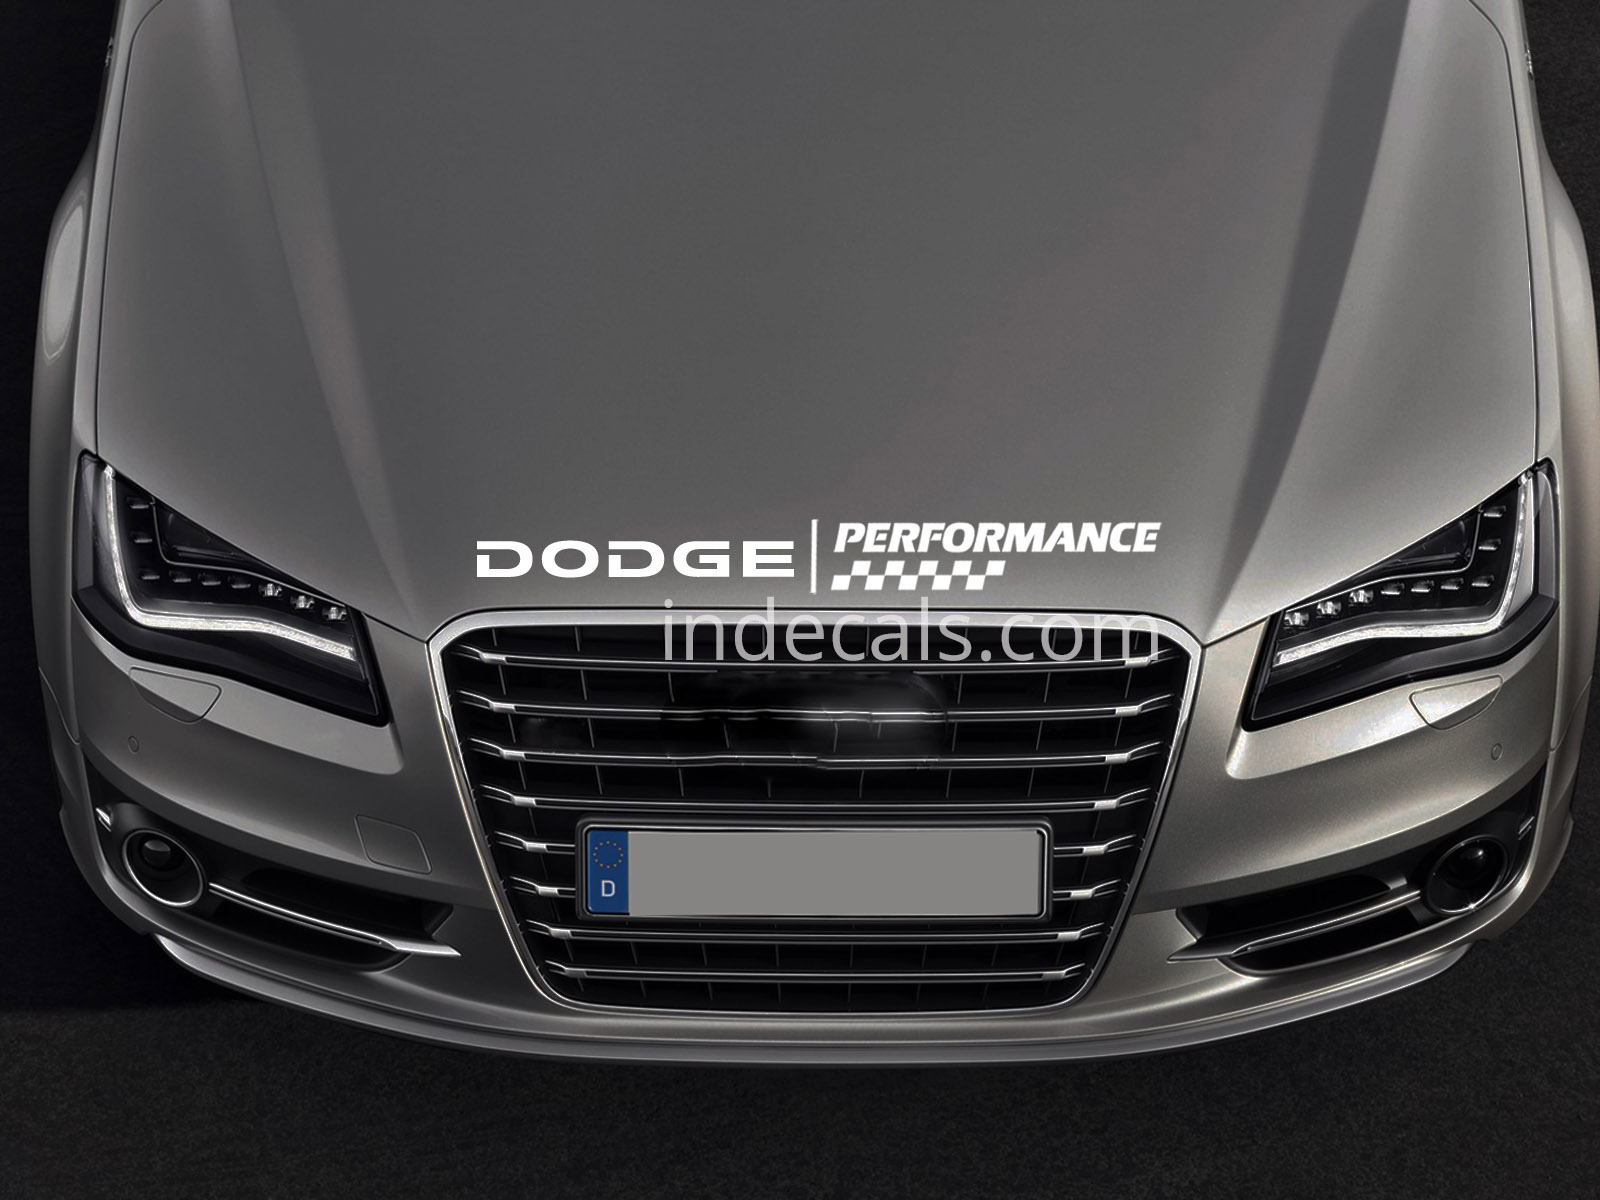 1 x Dodge Peformance Sticker for Bonnet - White